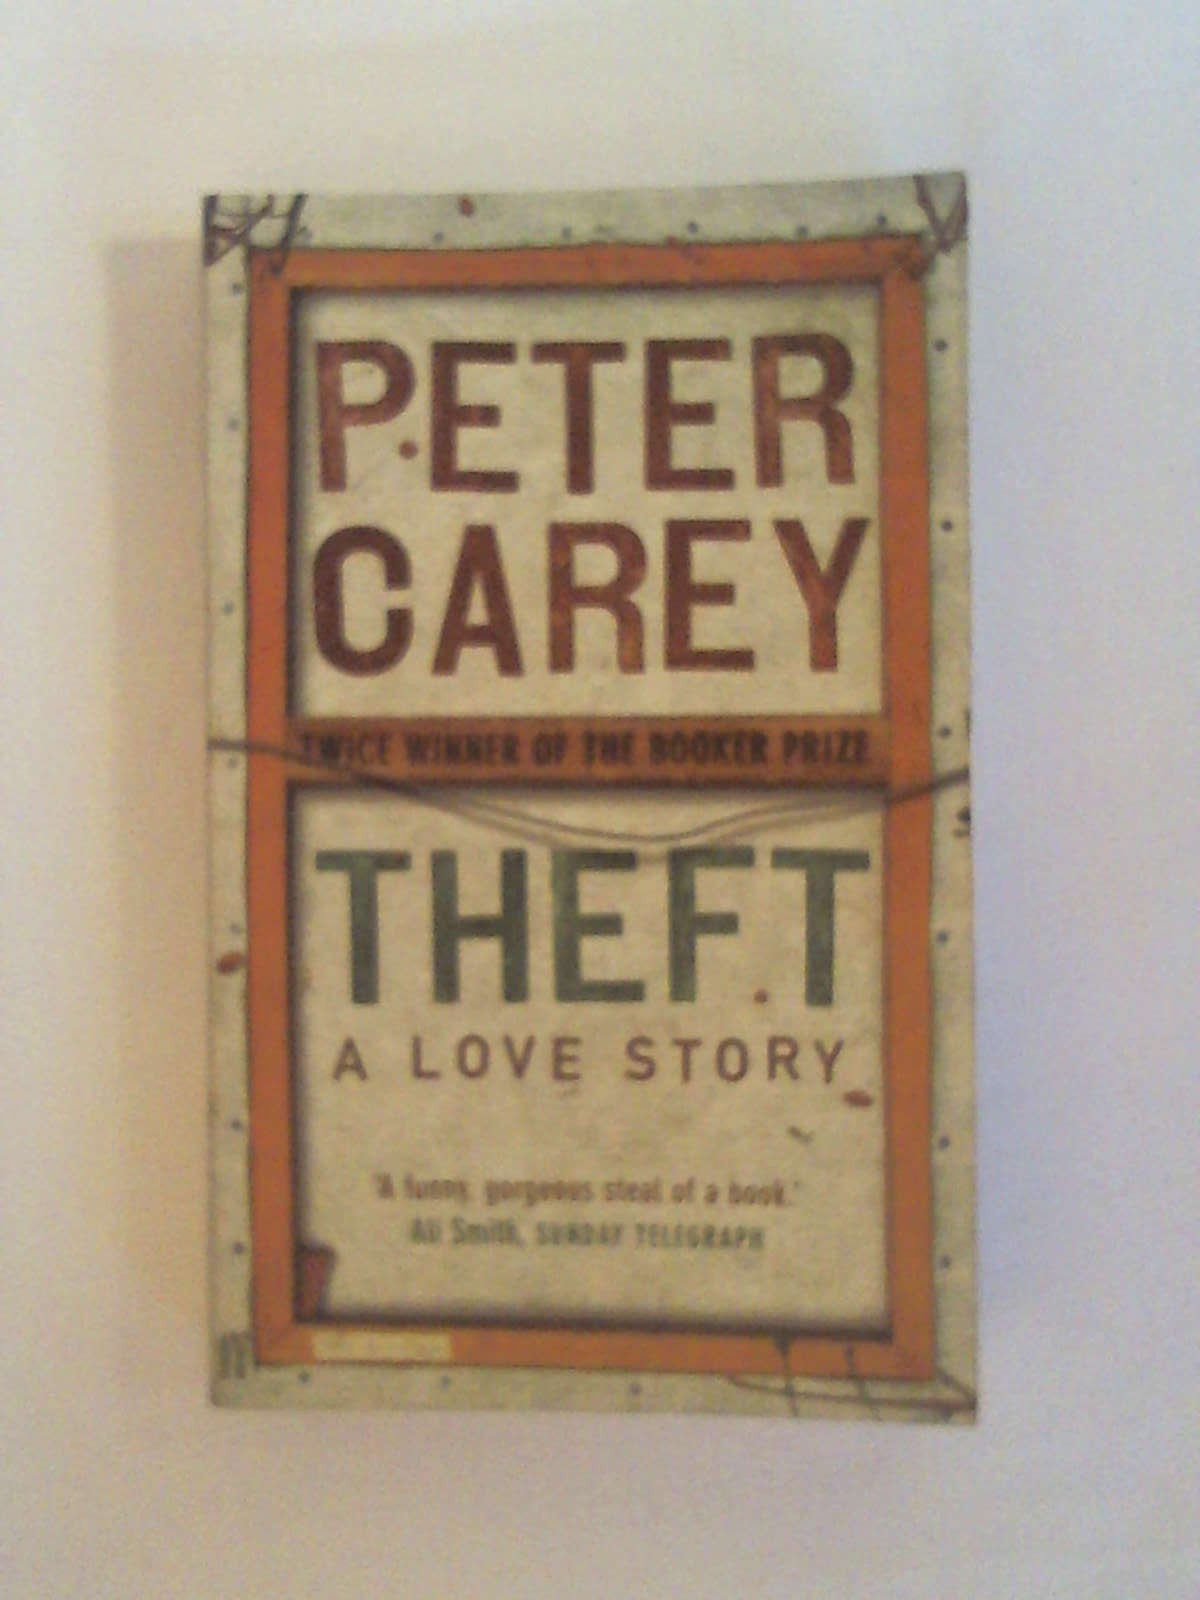 Theft: A Love Story. - Peter Carey